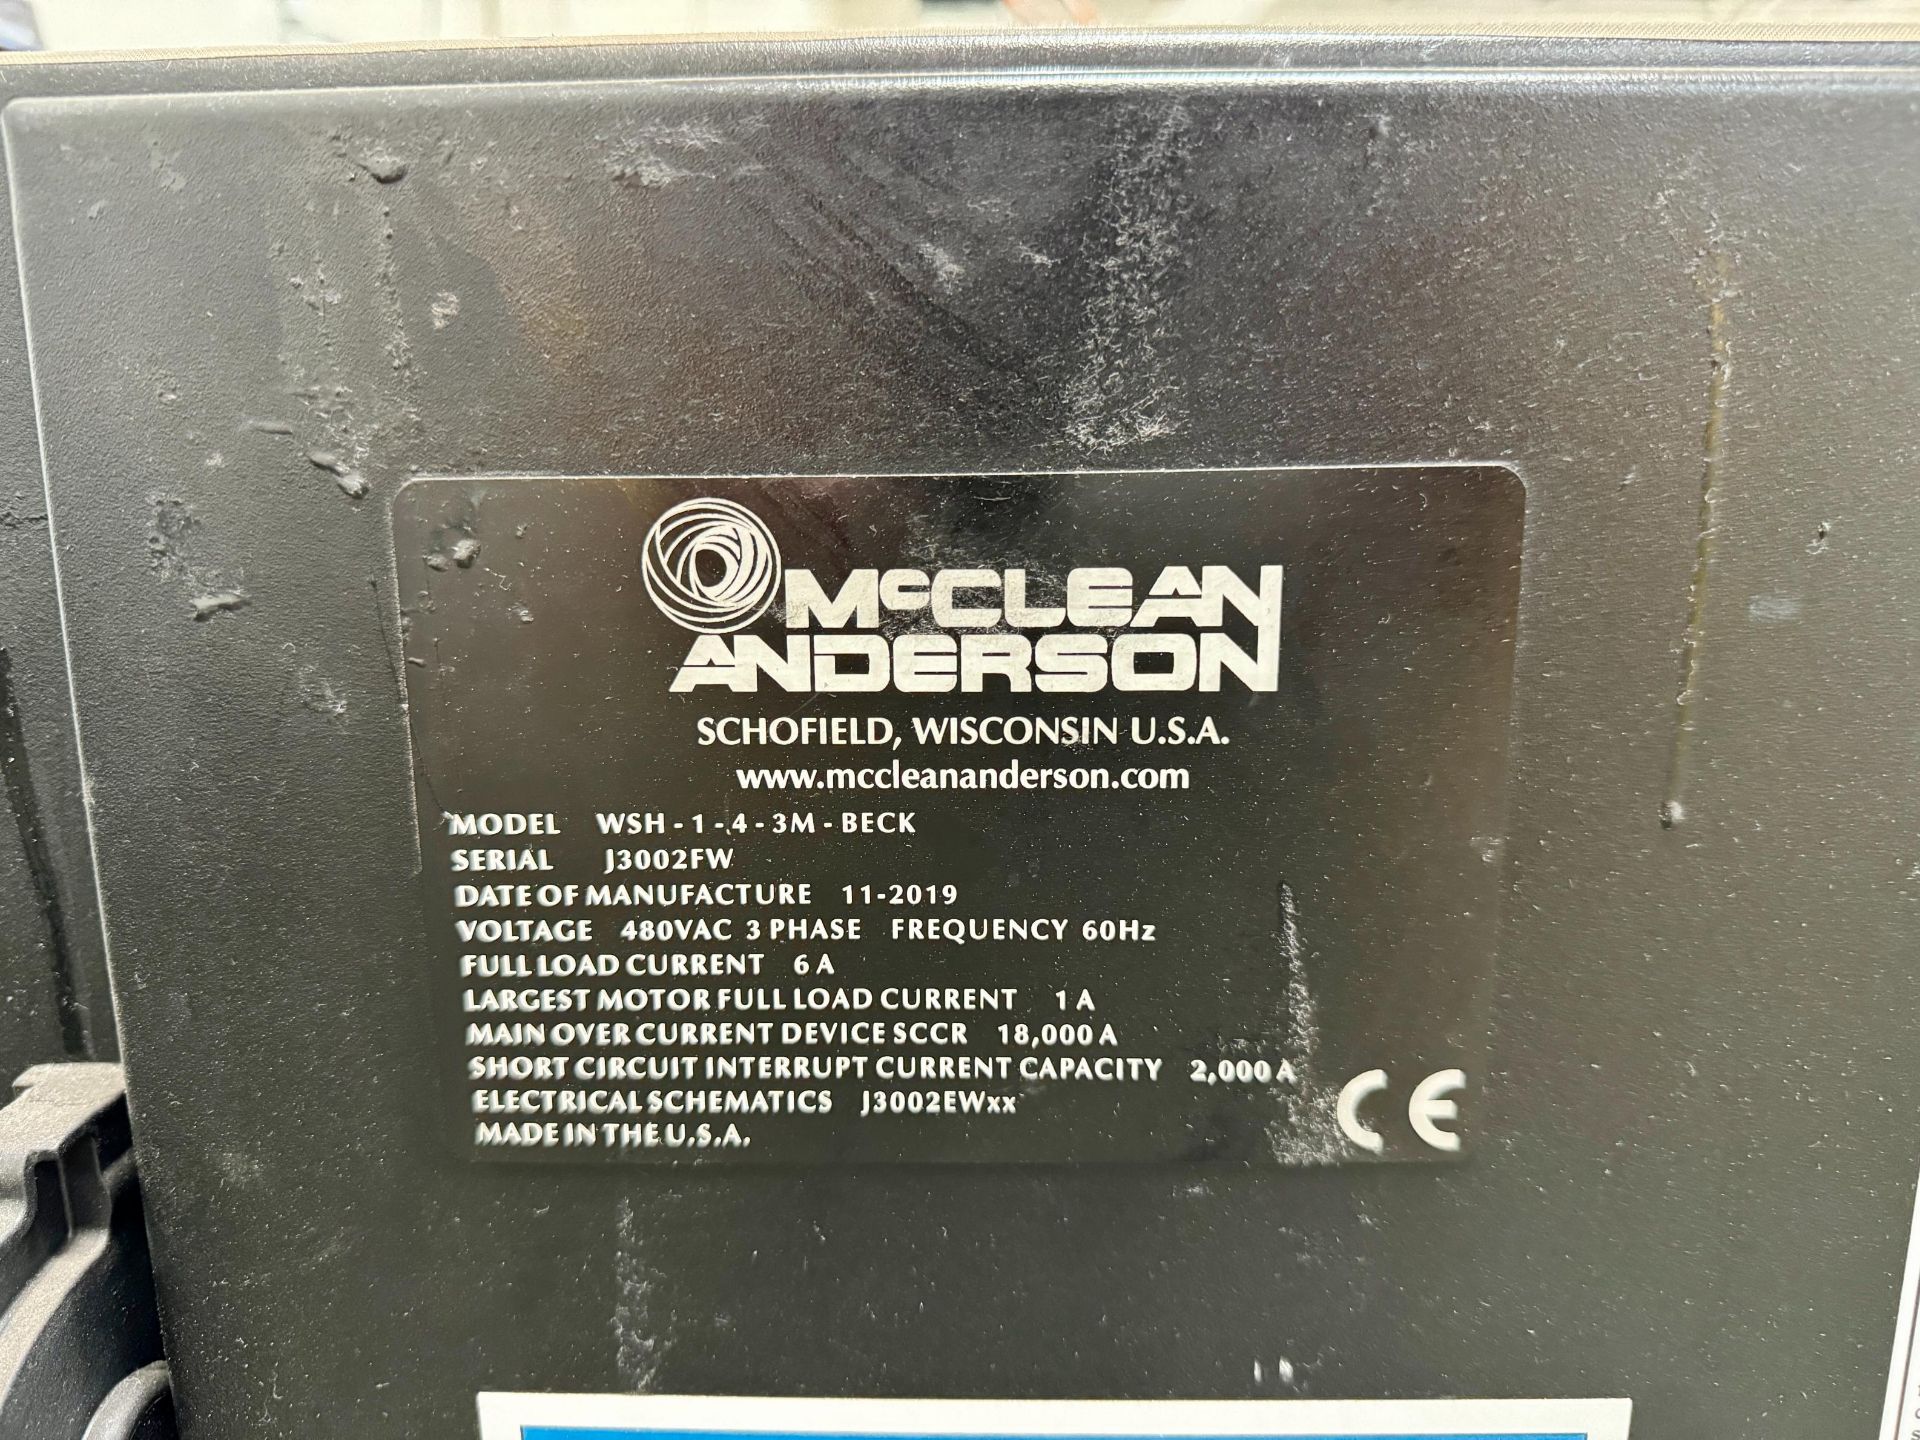 2019 MCCLEAN ANDERSON WSH-1-4-3M-BECK FILAMENT WINDER, SUPER HORNET, 3 METER, MULTI AXIS, OCELOT - Image 24 of 24